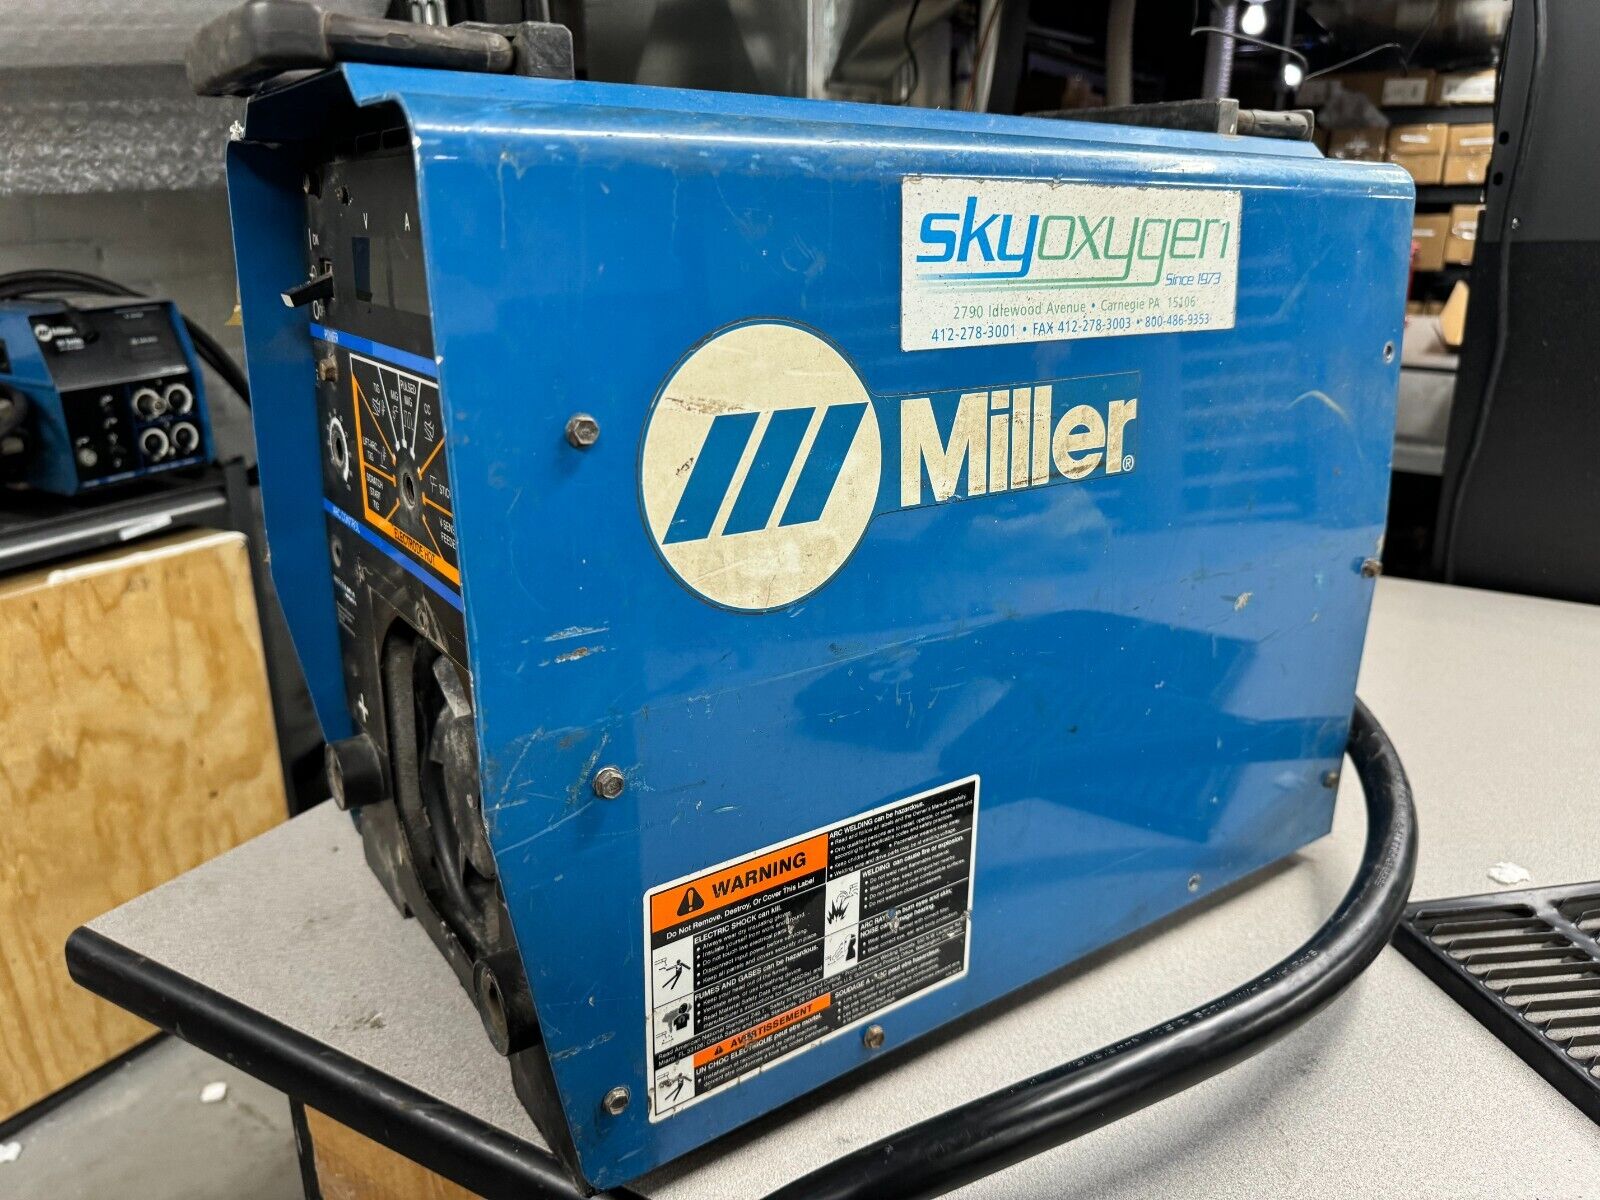 Miller XMT 304 CC DC Inverter Arc Welder - AS is / for parts